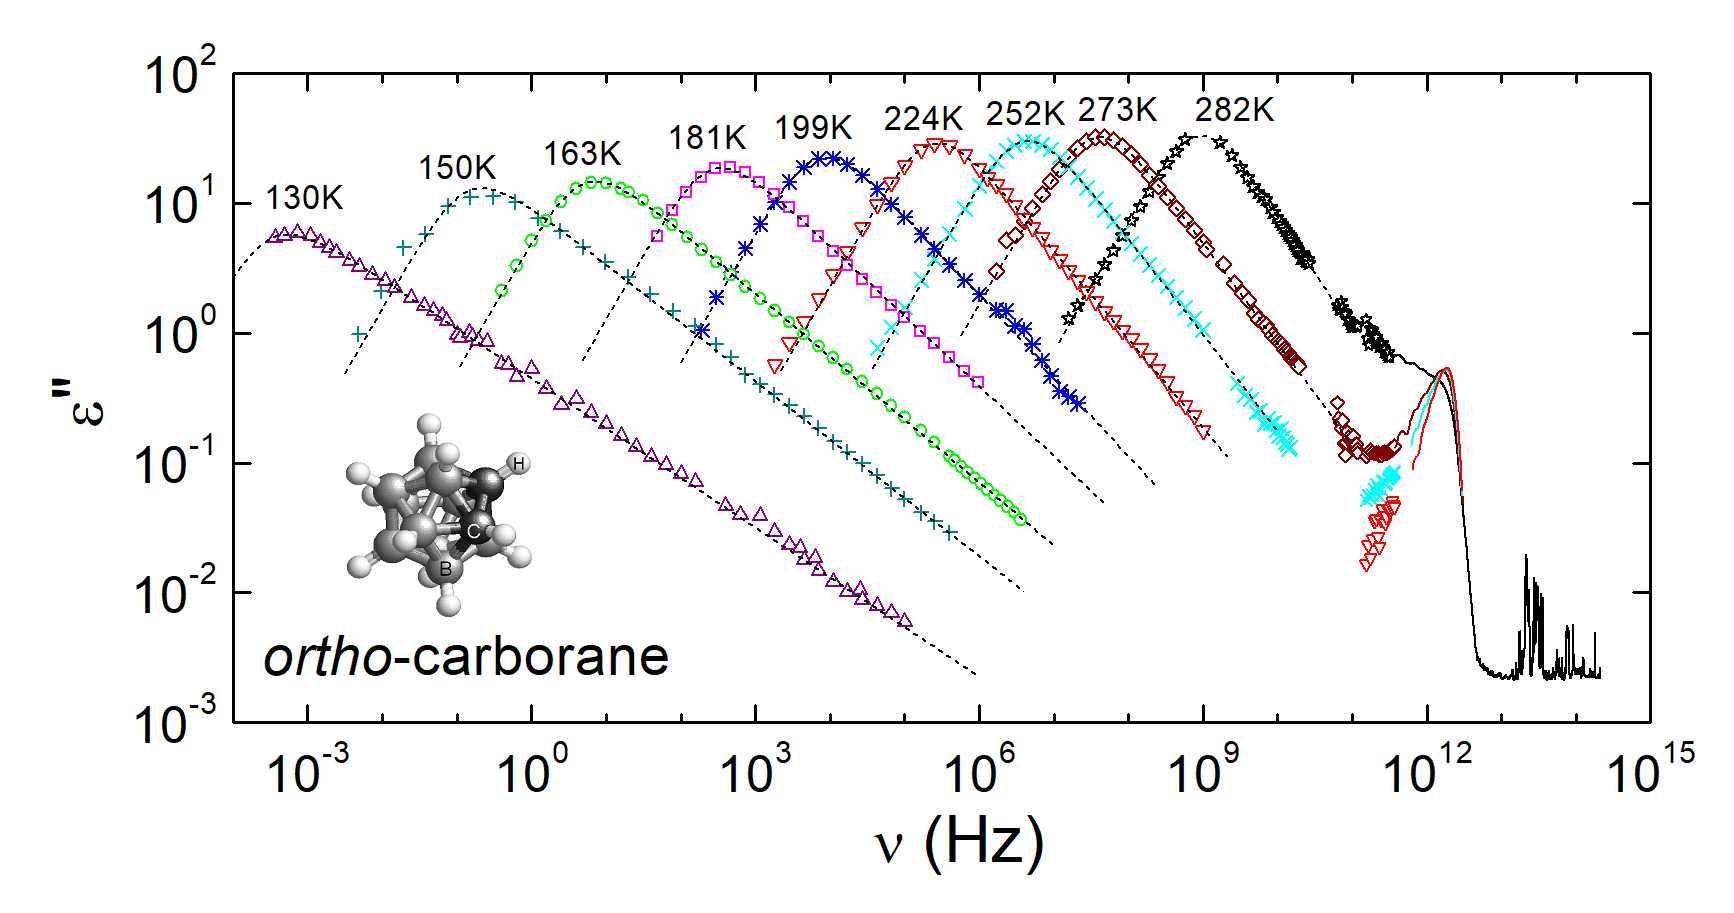 Broadband o-carborane spectra